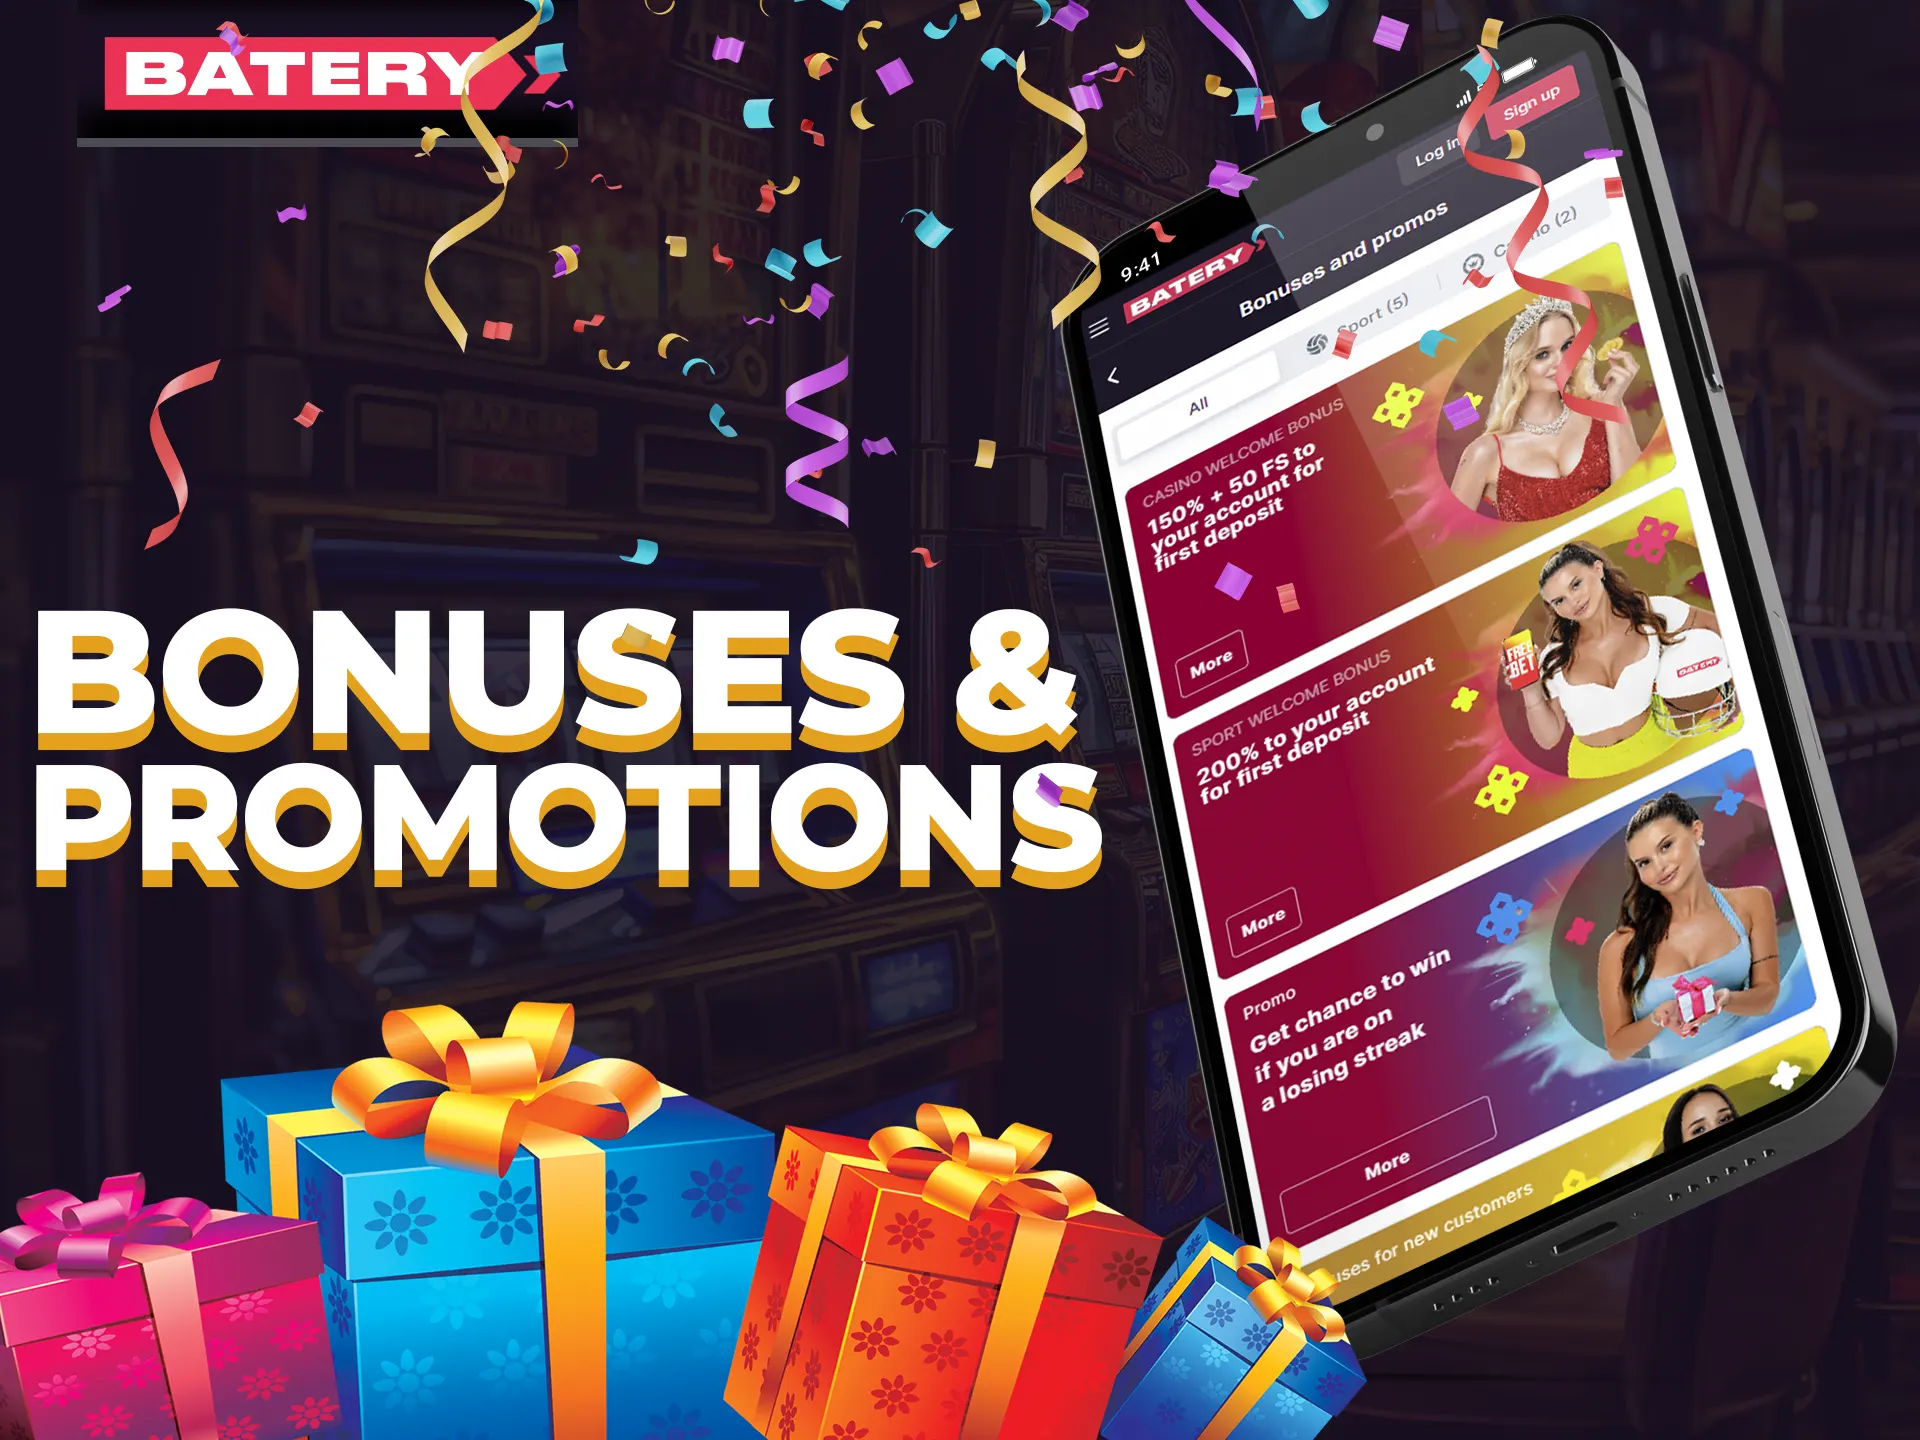 Batery Mobile Casino Bonuses: 150% up to 25,000 INR + 50 FS, sports bonuses, cashback.